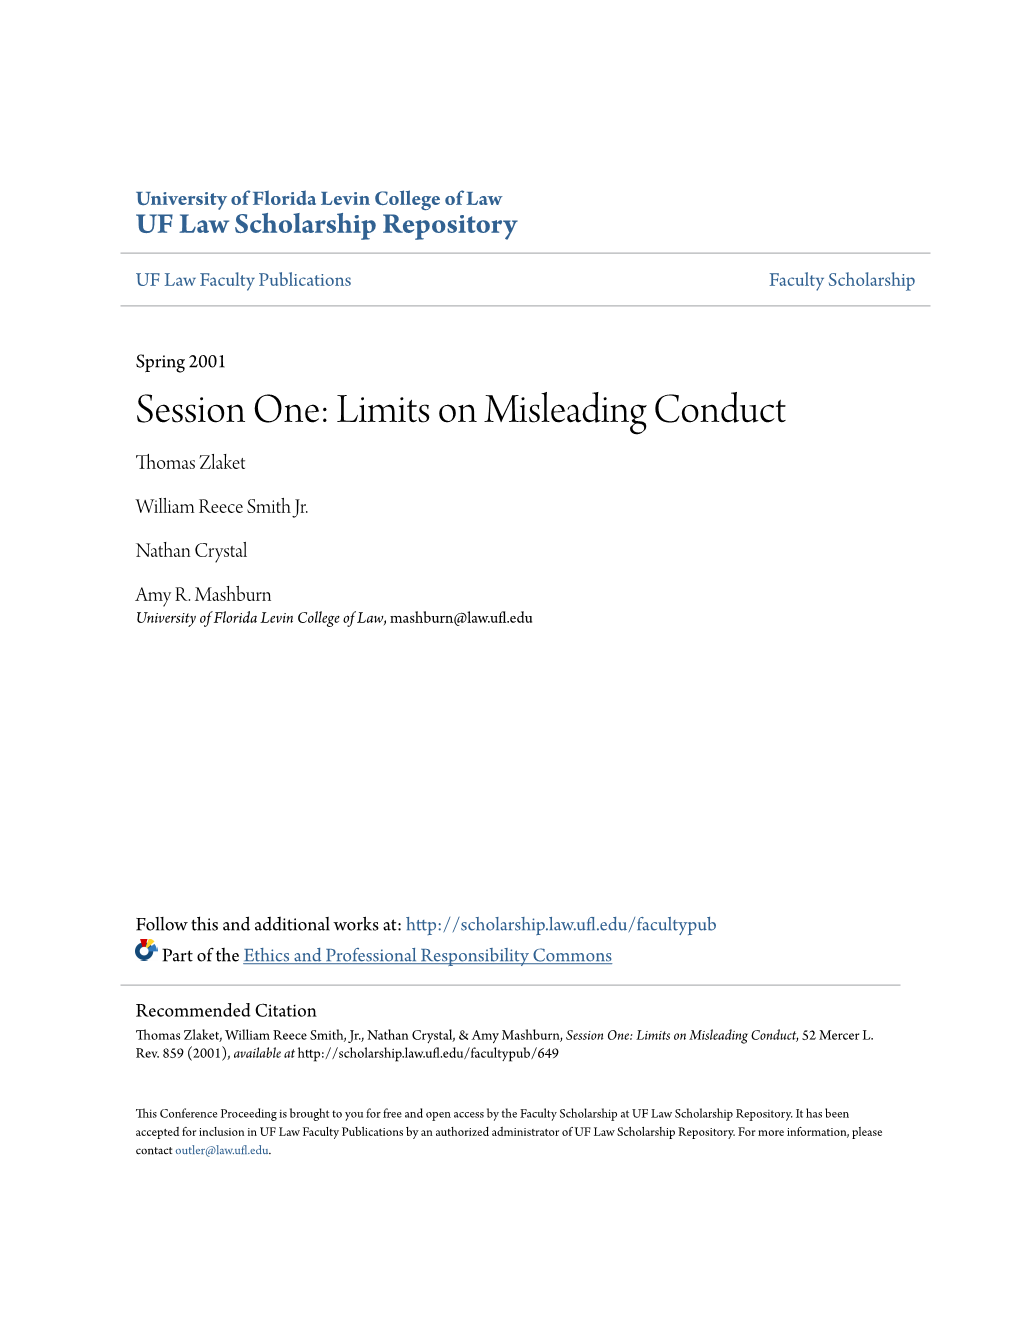 Session One: Limits on Misleading Conduct Thomas Zlaket